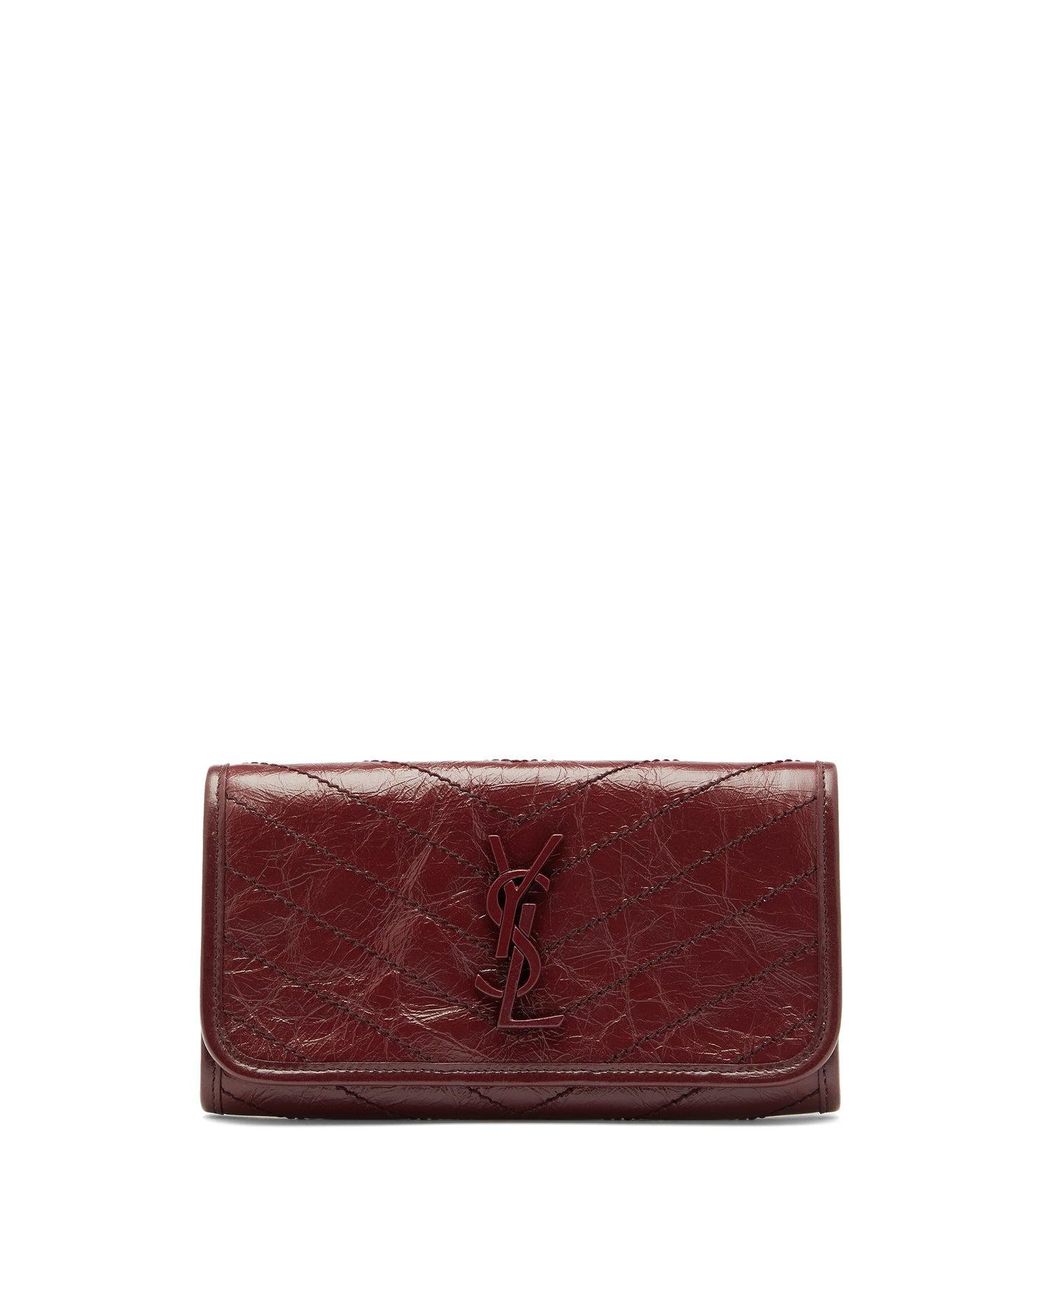 Saint Laurent Niki Ysl Monogram Crinkle Leather Wallet | Lyst